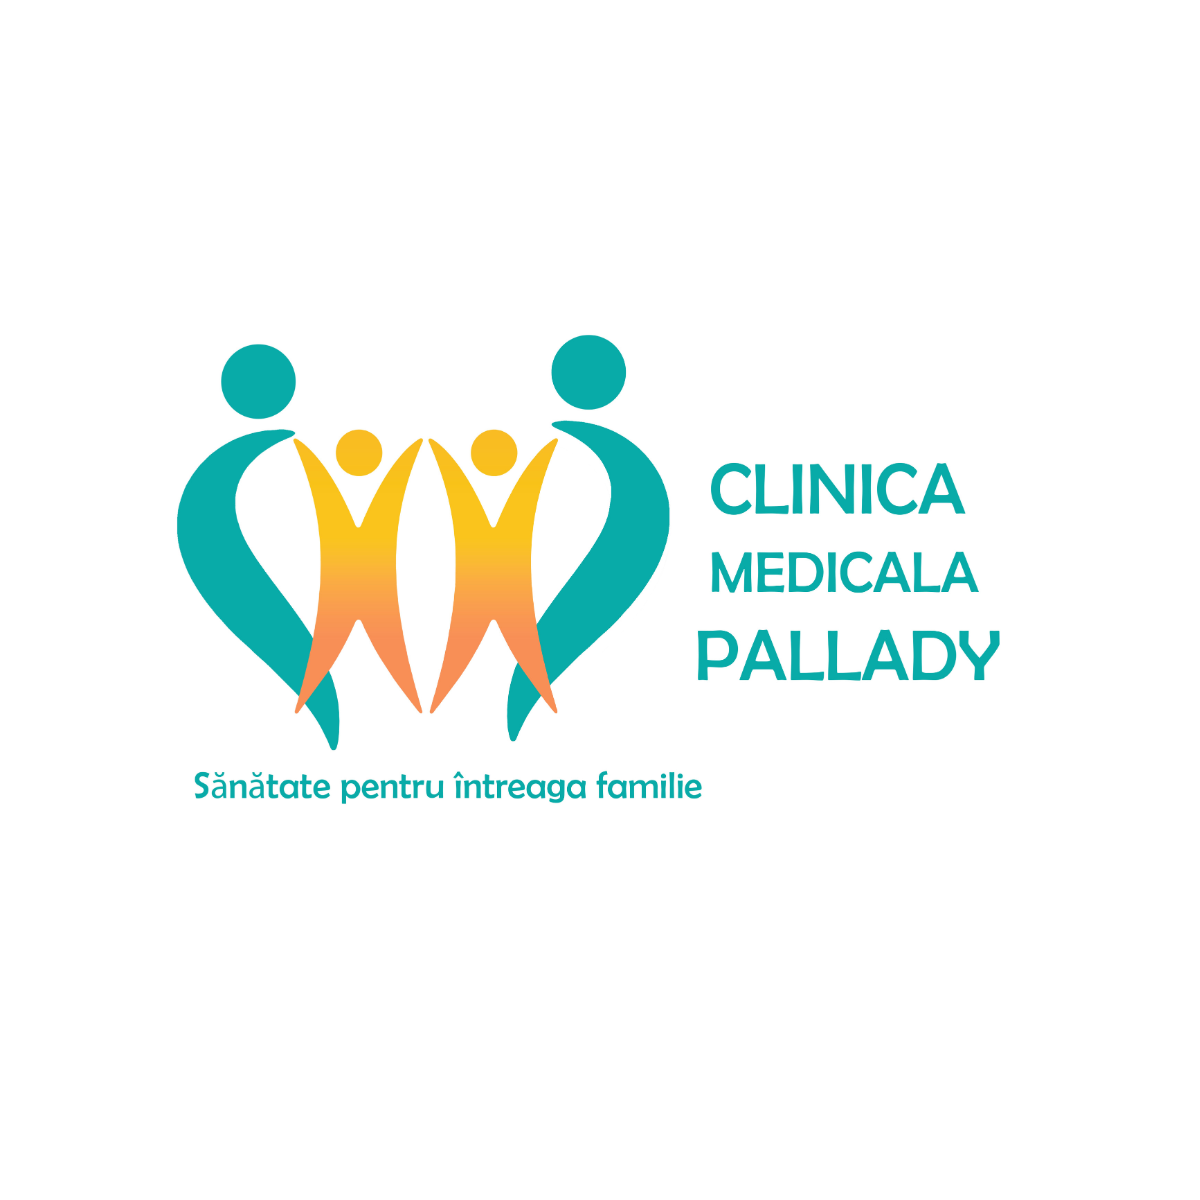 Clinica Medicala Pallady